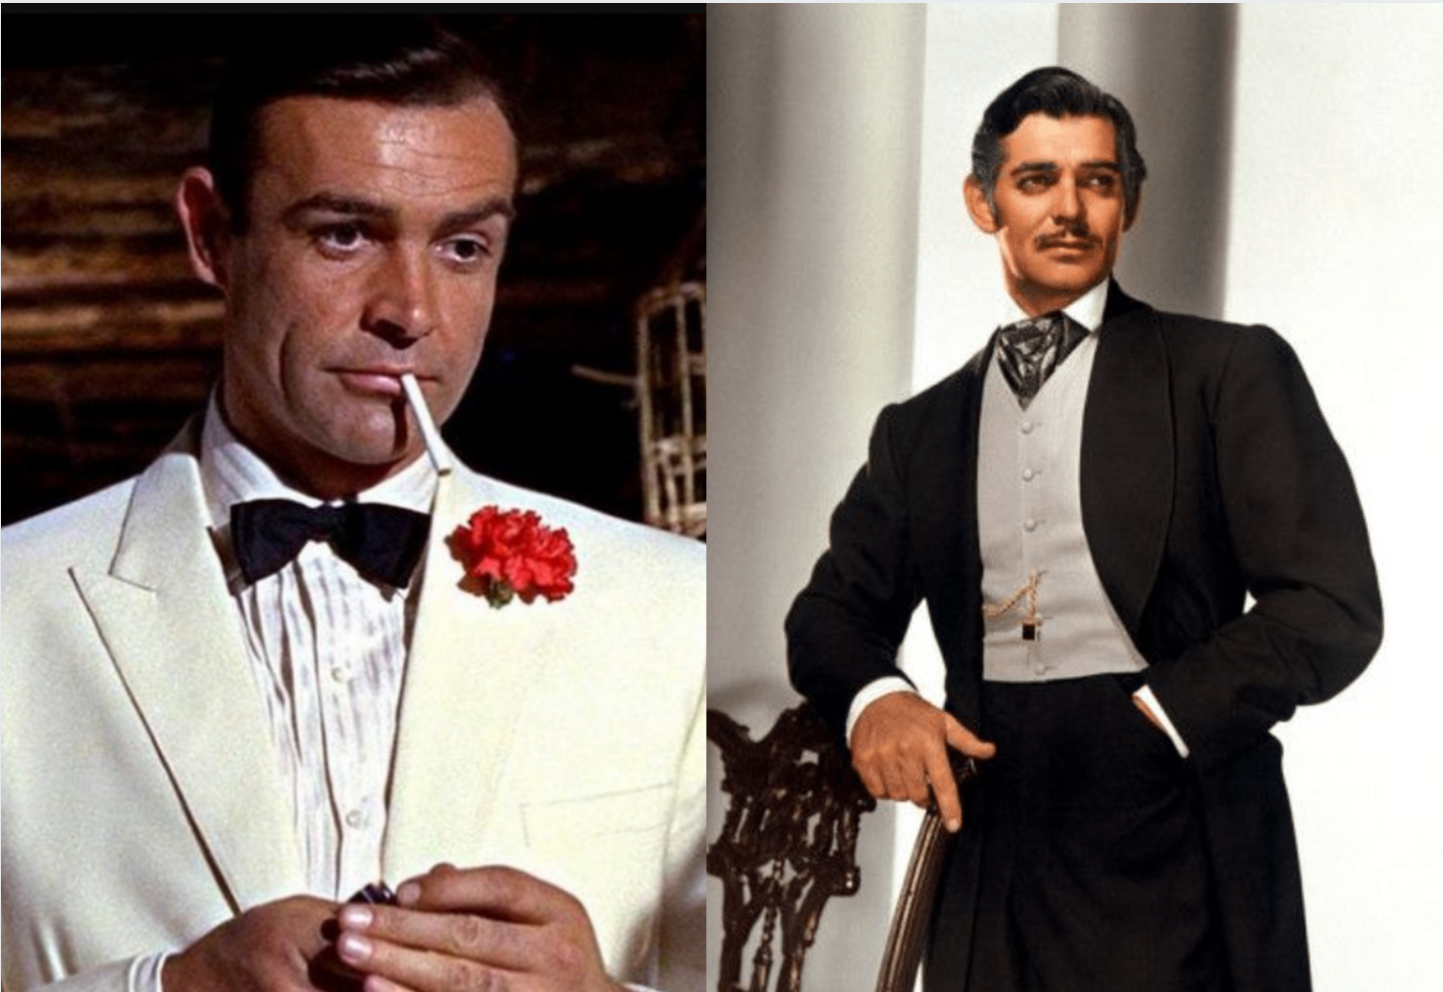 Sean Connery's James Bond and Rhett Butler's Clark Gable